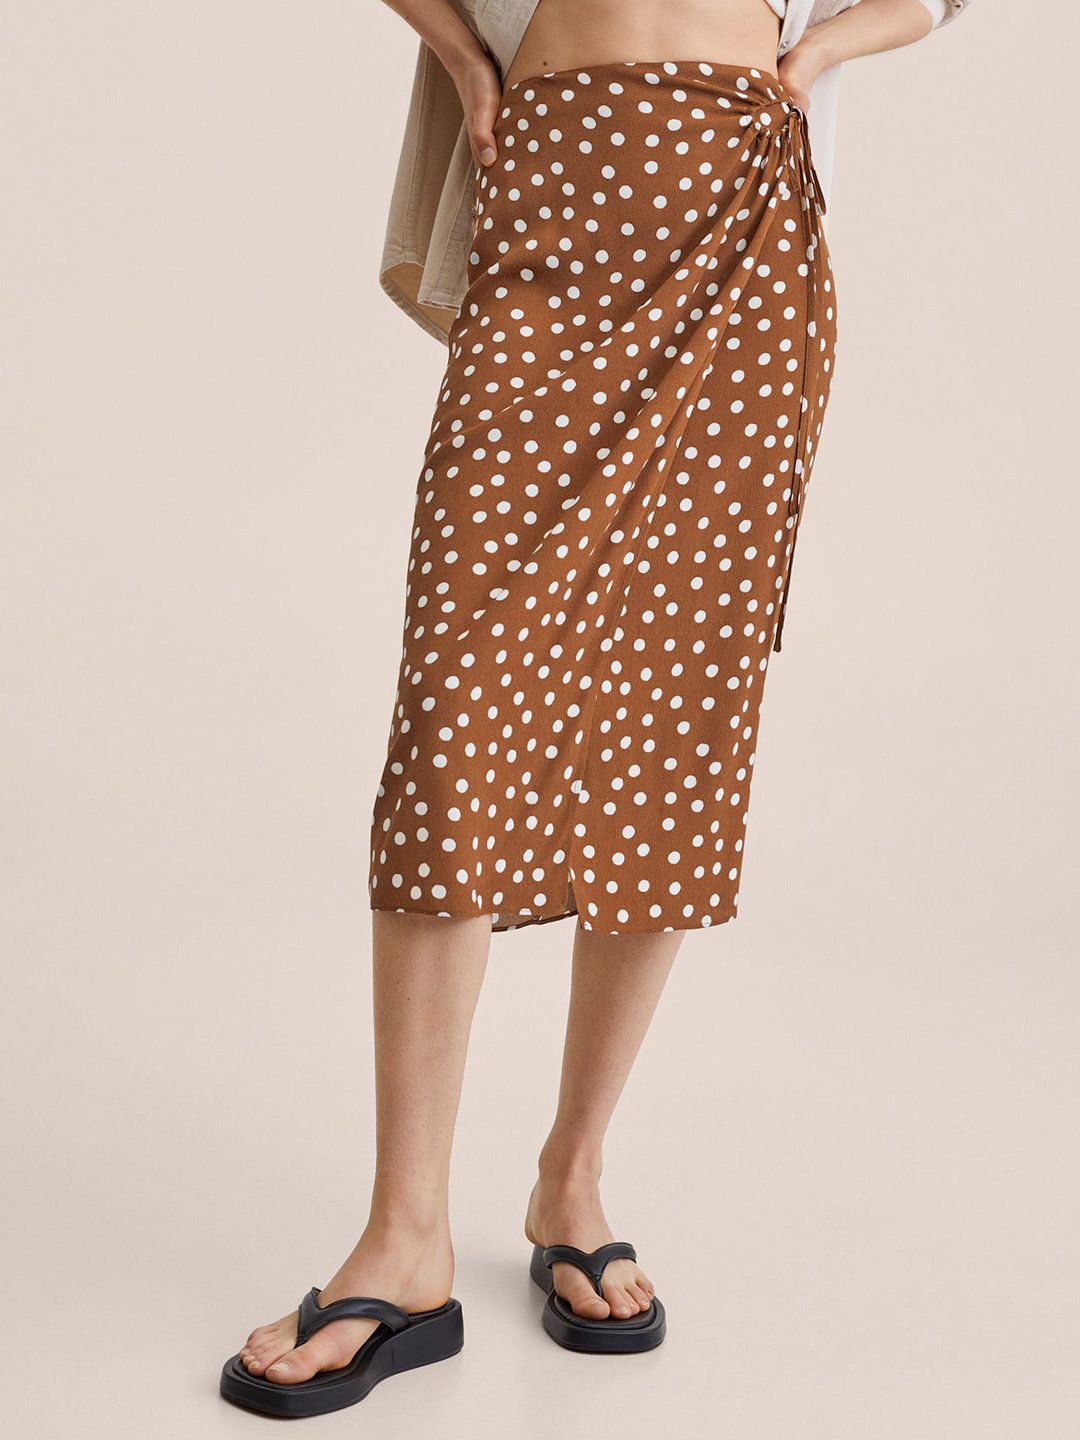 MANGO Women Brown and White Polka Dot Printed Skirt Price in India